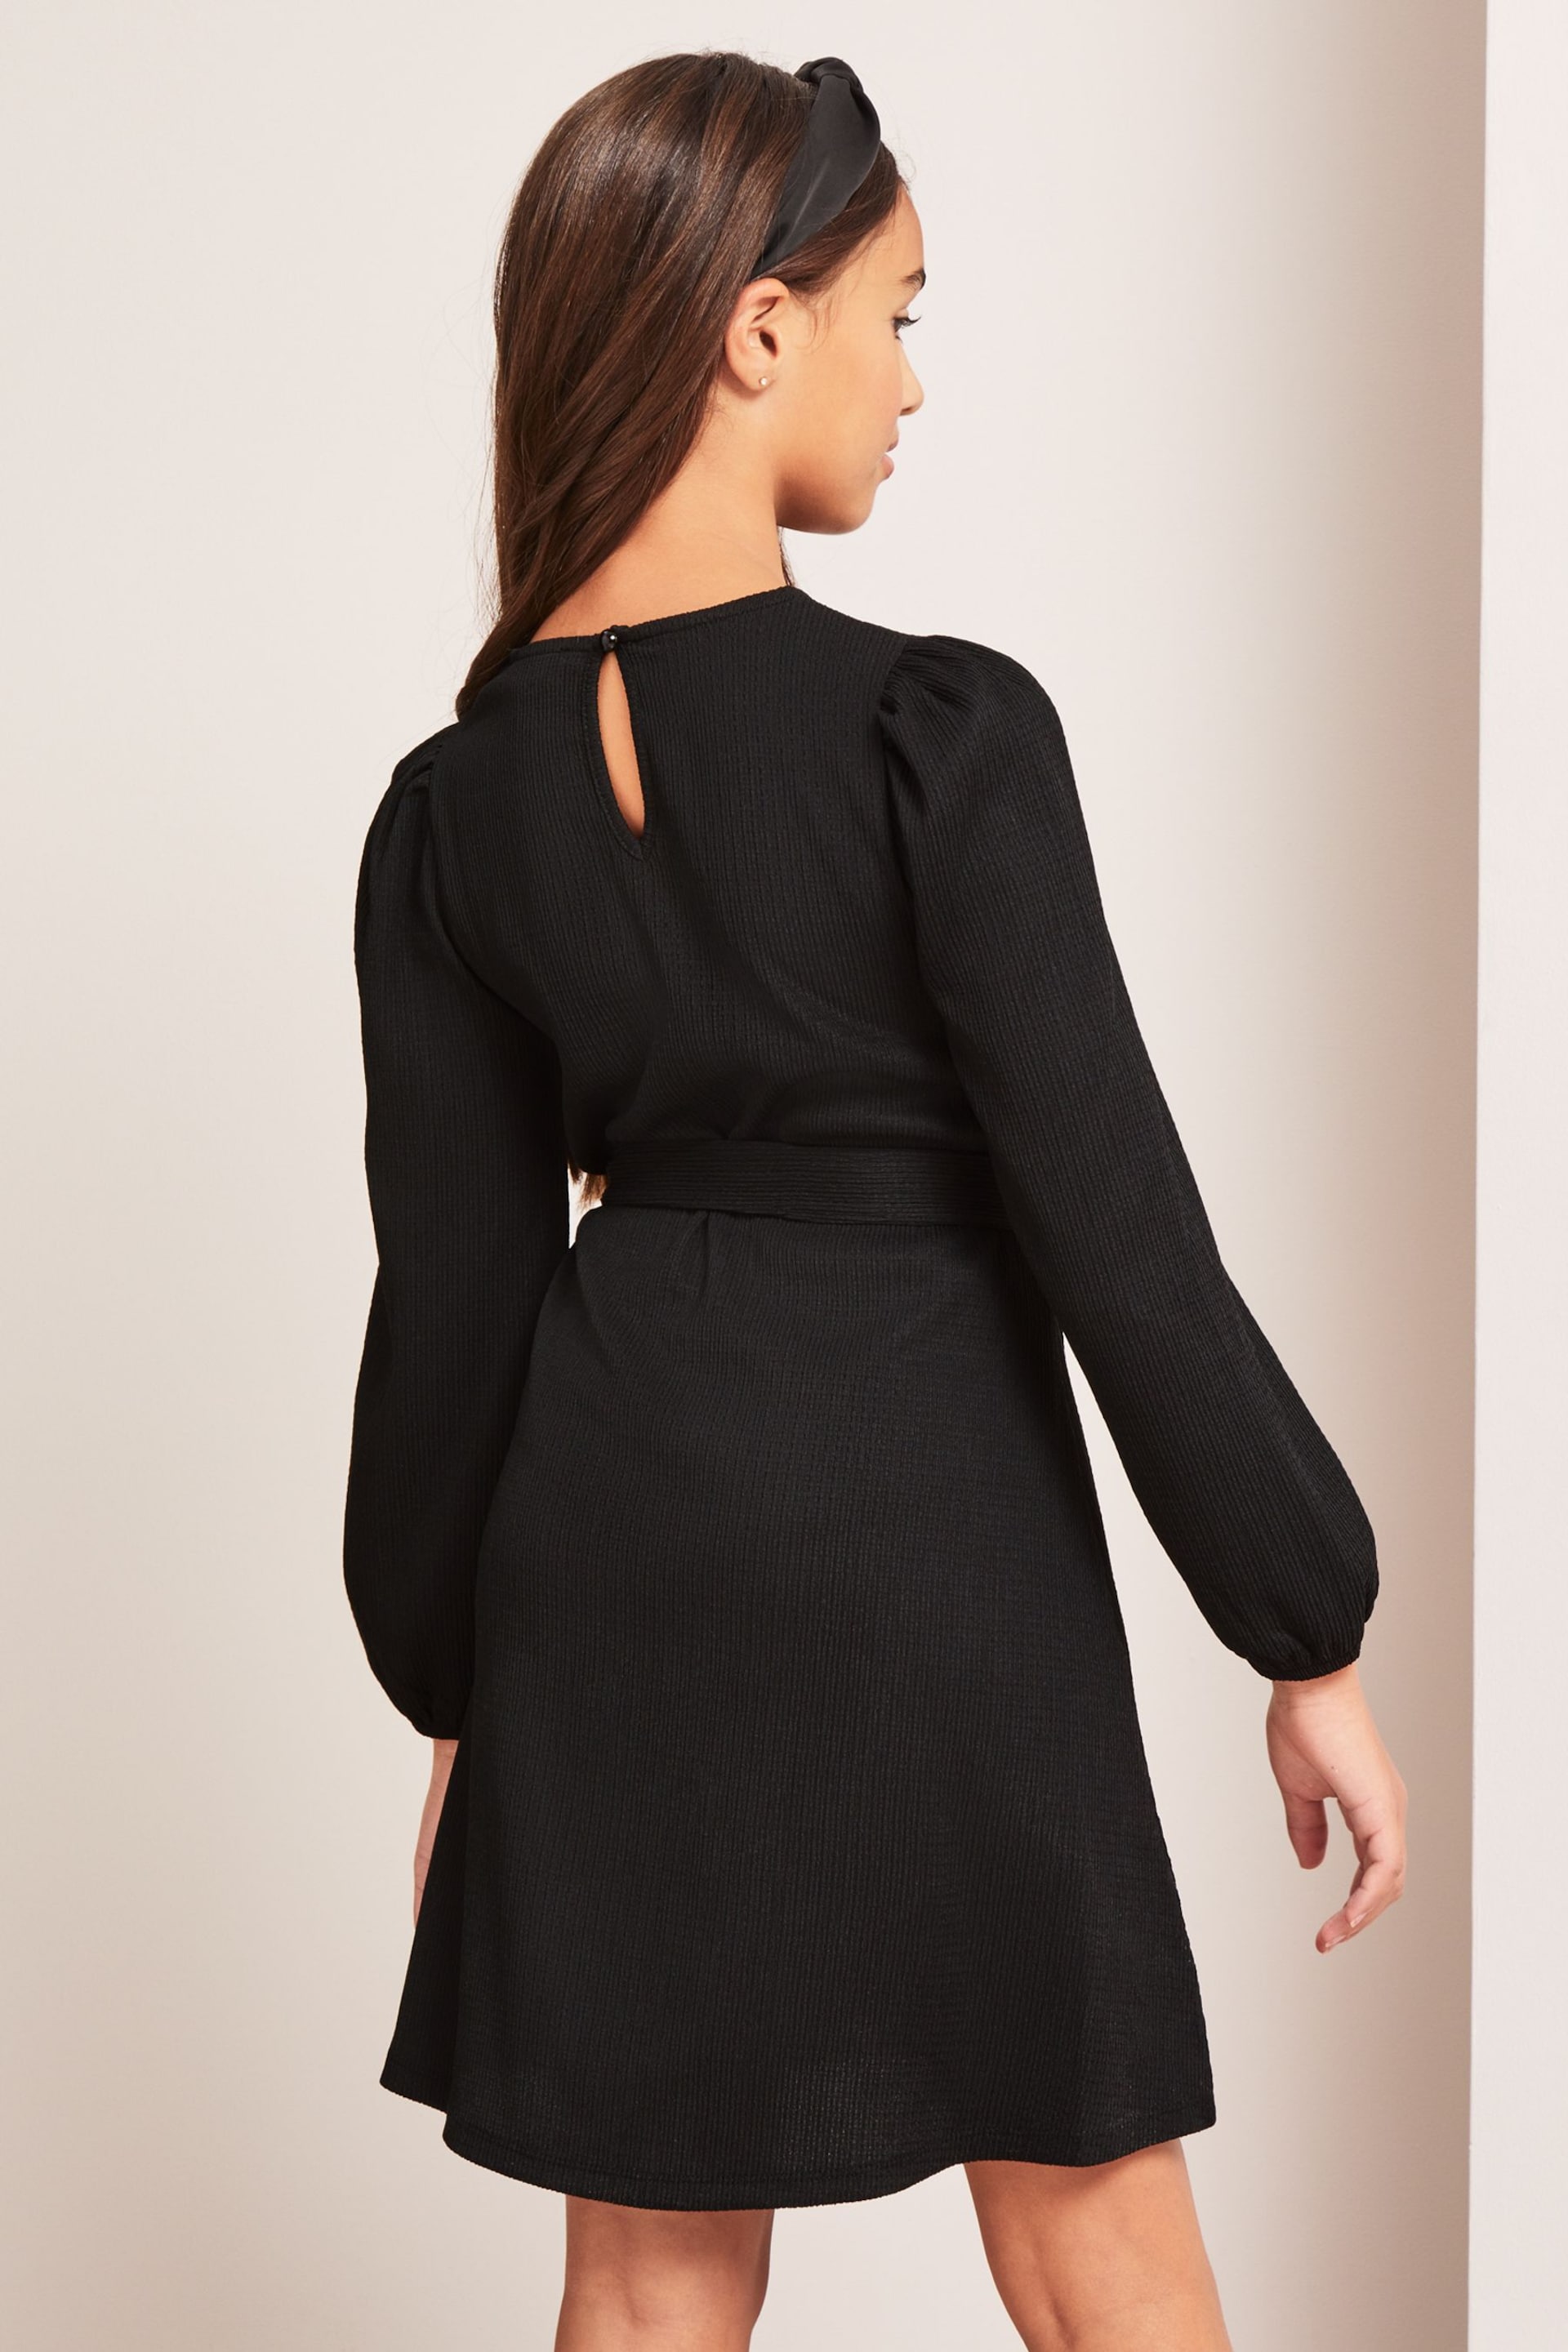 Lipsy Black Crinkle Jersey Long Sleeve Dress - Image 3 of 4